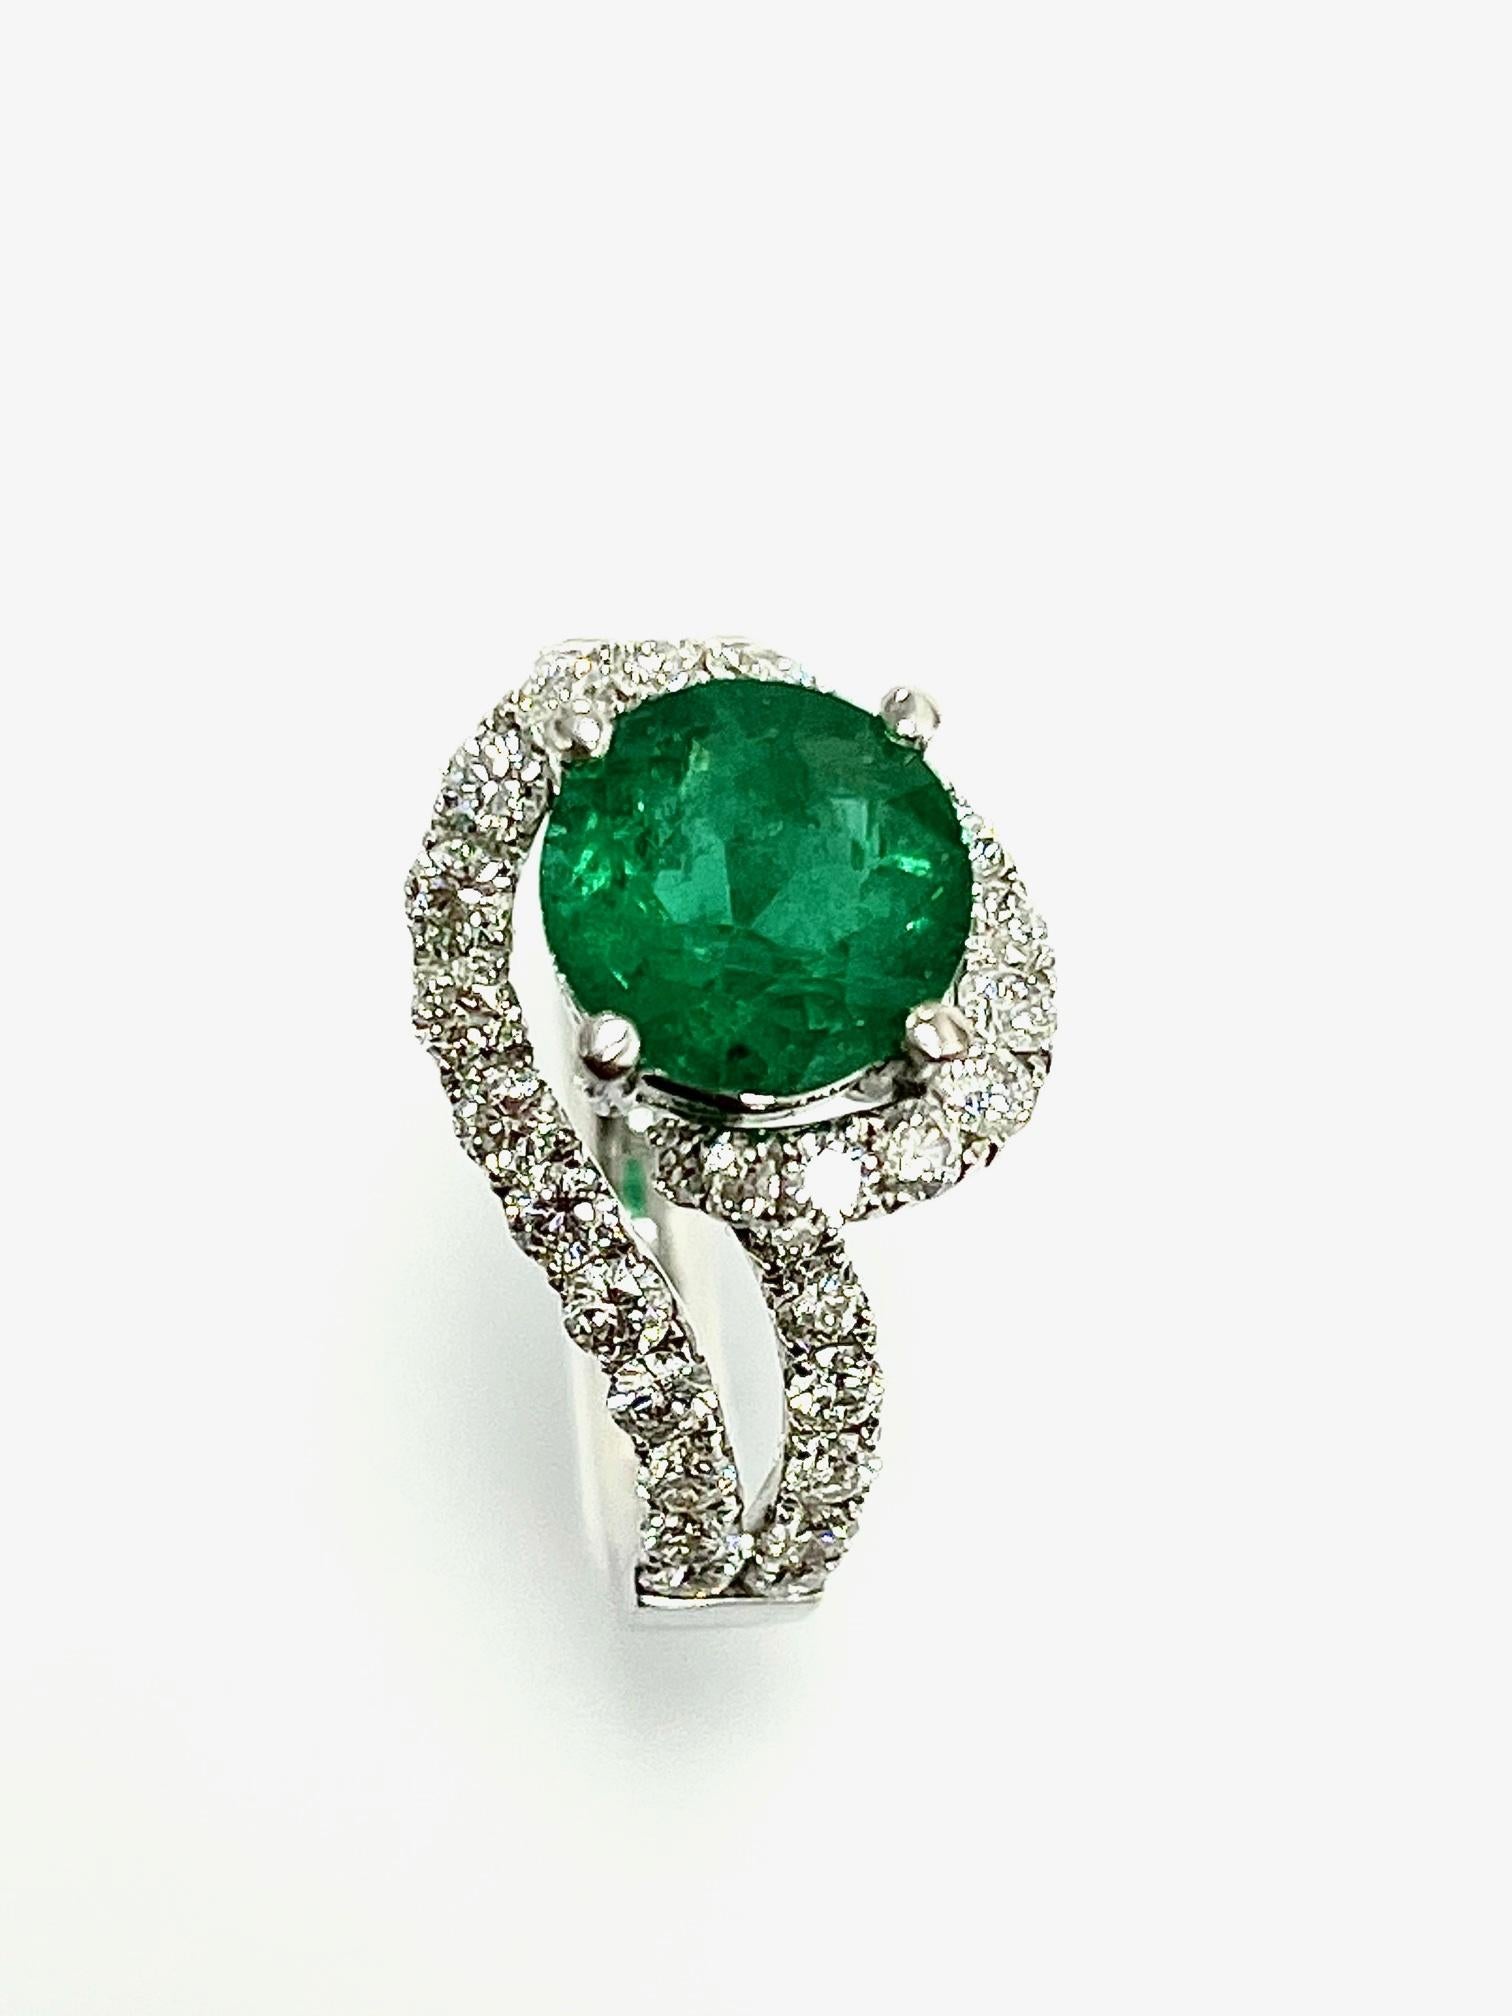 Modern 1.88 Carat Emerald Diamond Cocktail Ring For Sale